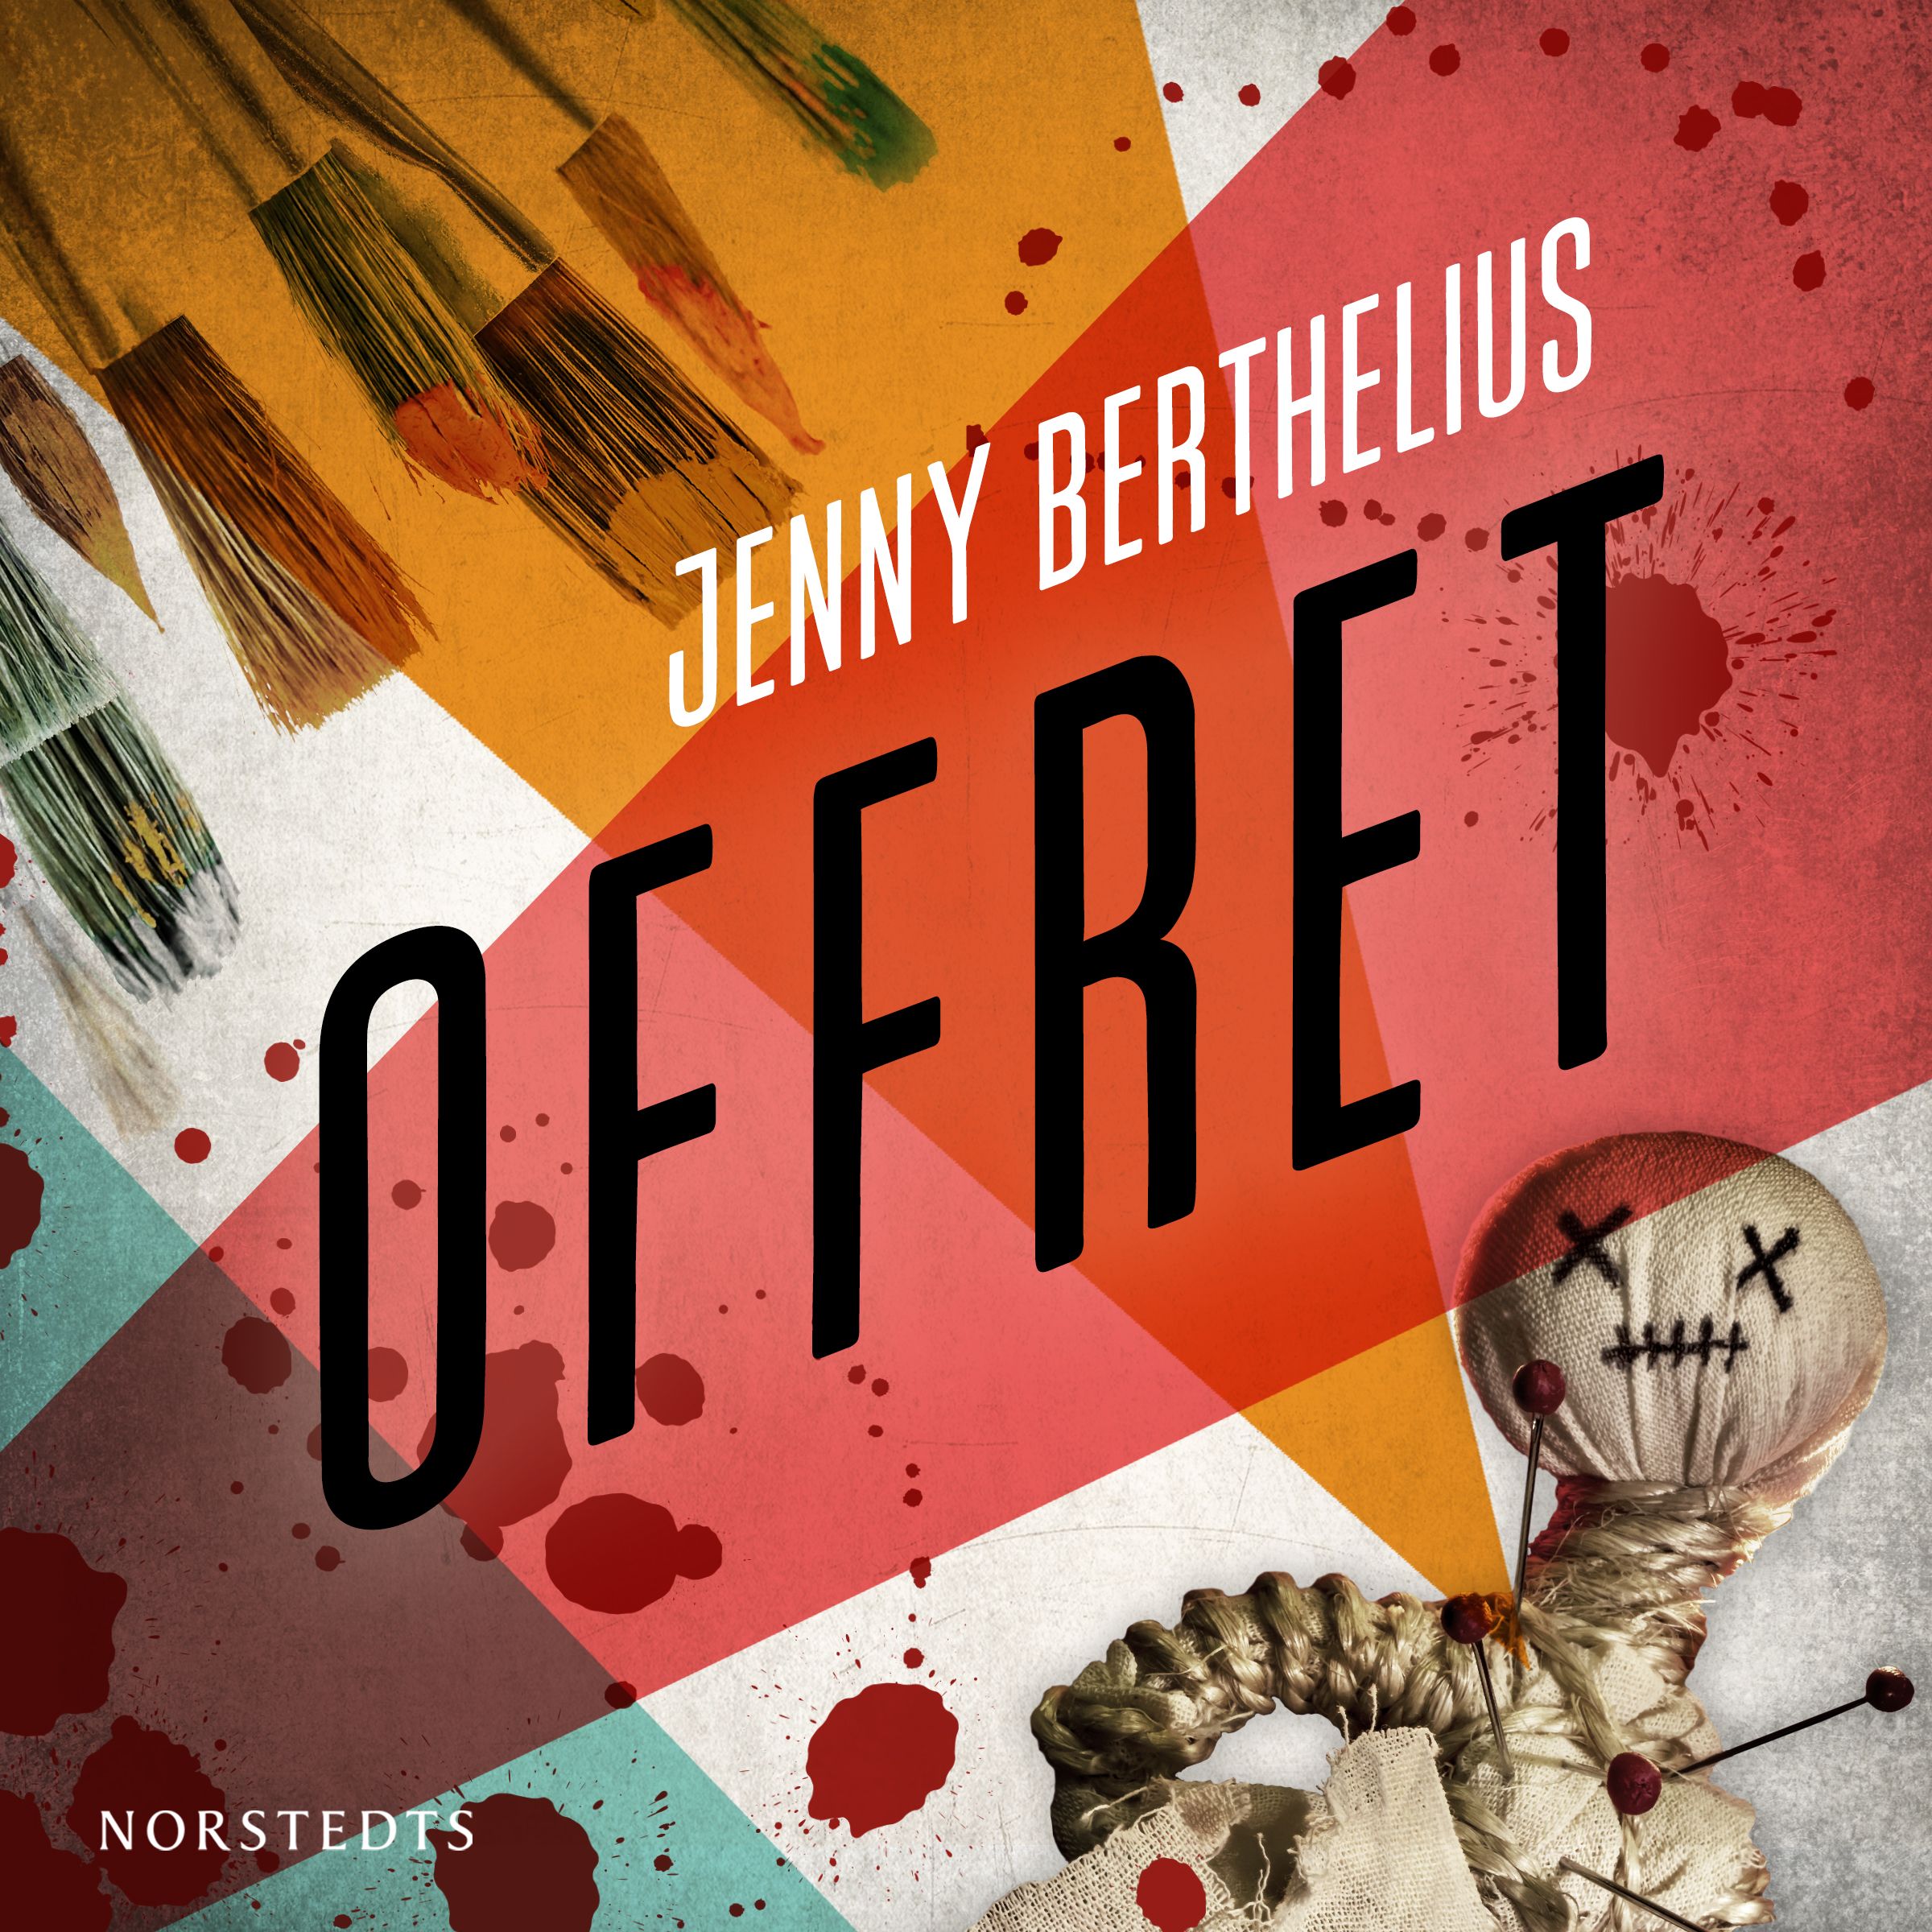 Offret, ljudbok av Jenny Berthelius